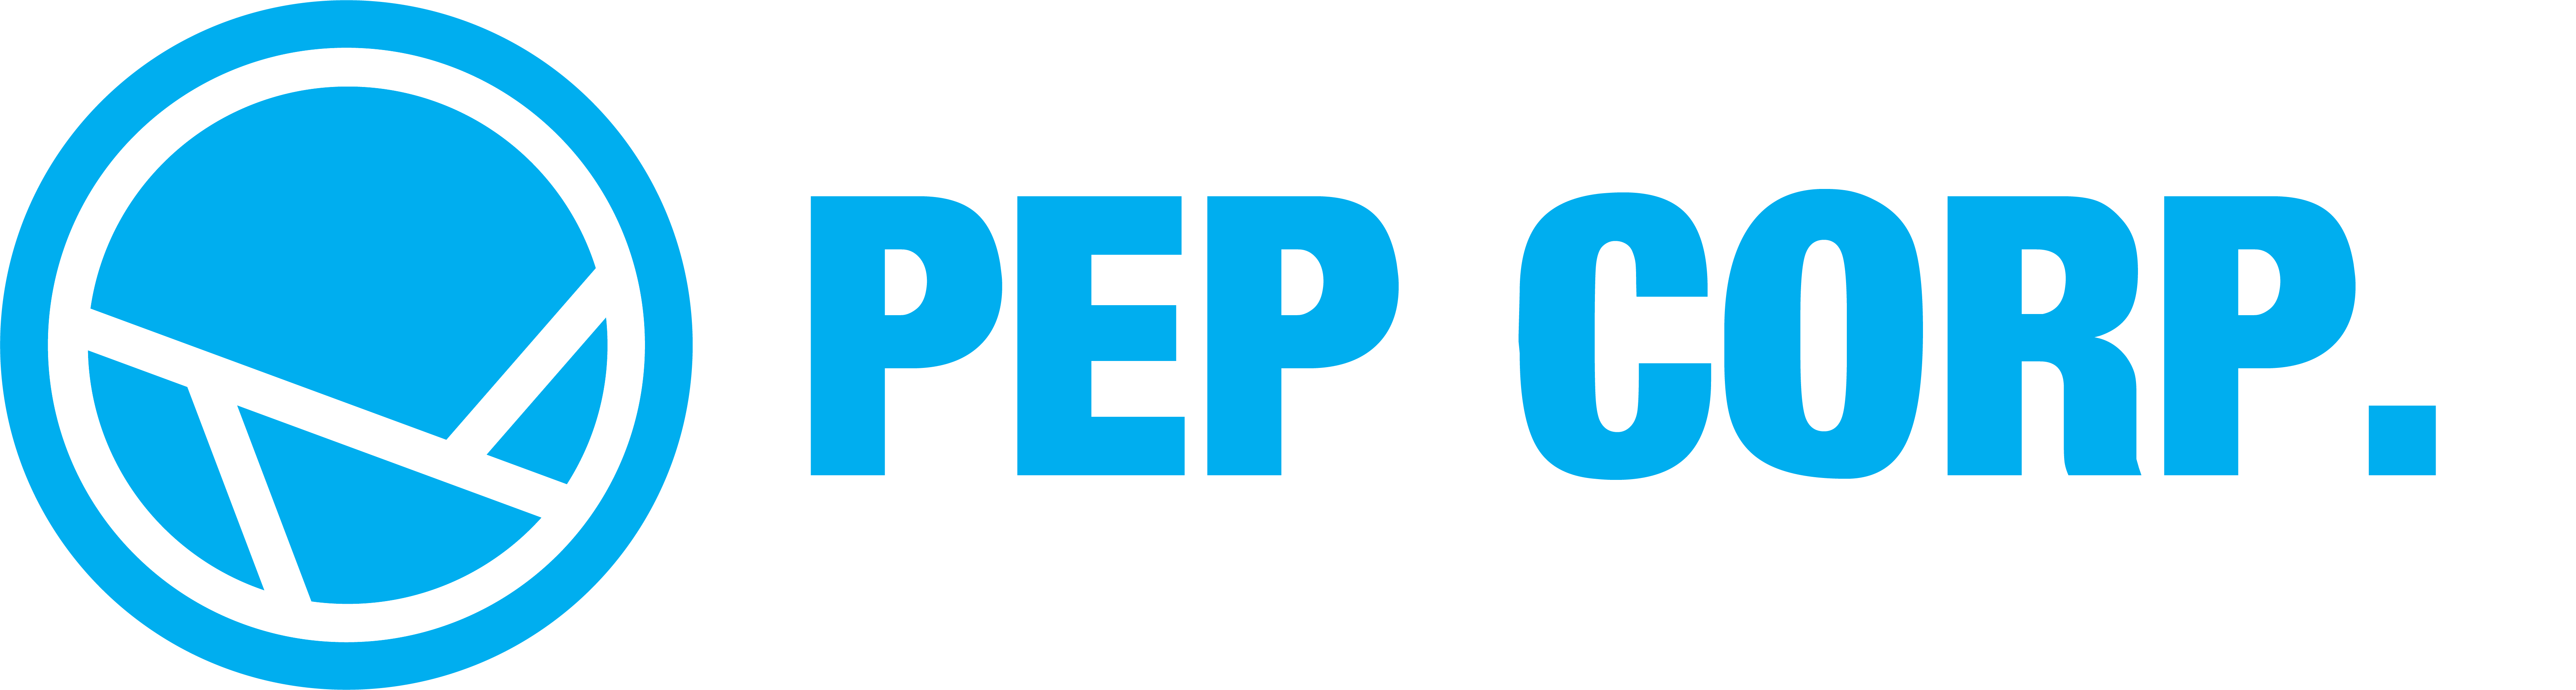 Pep Corp.